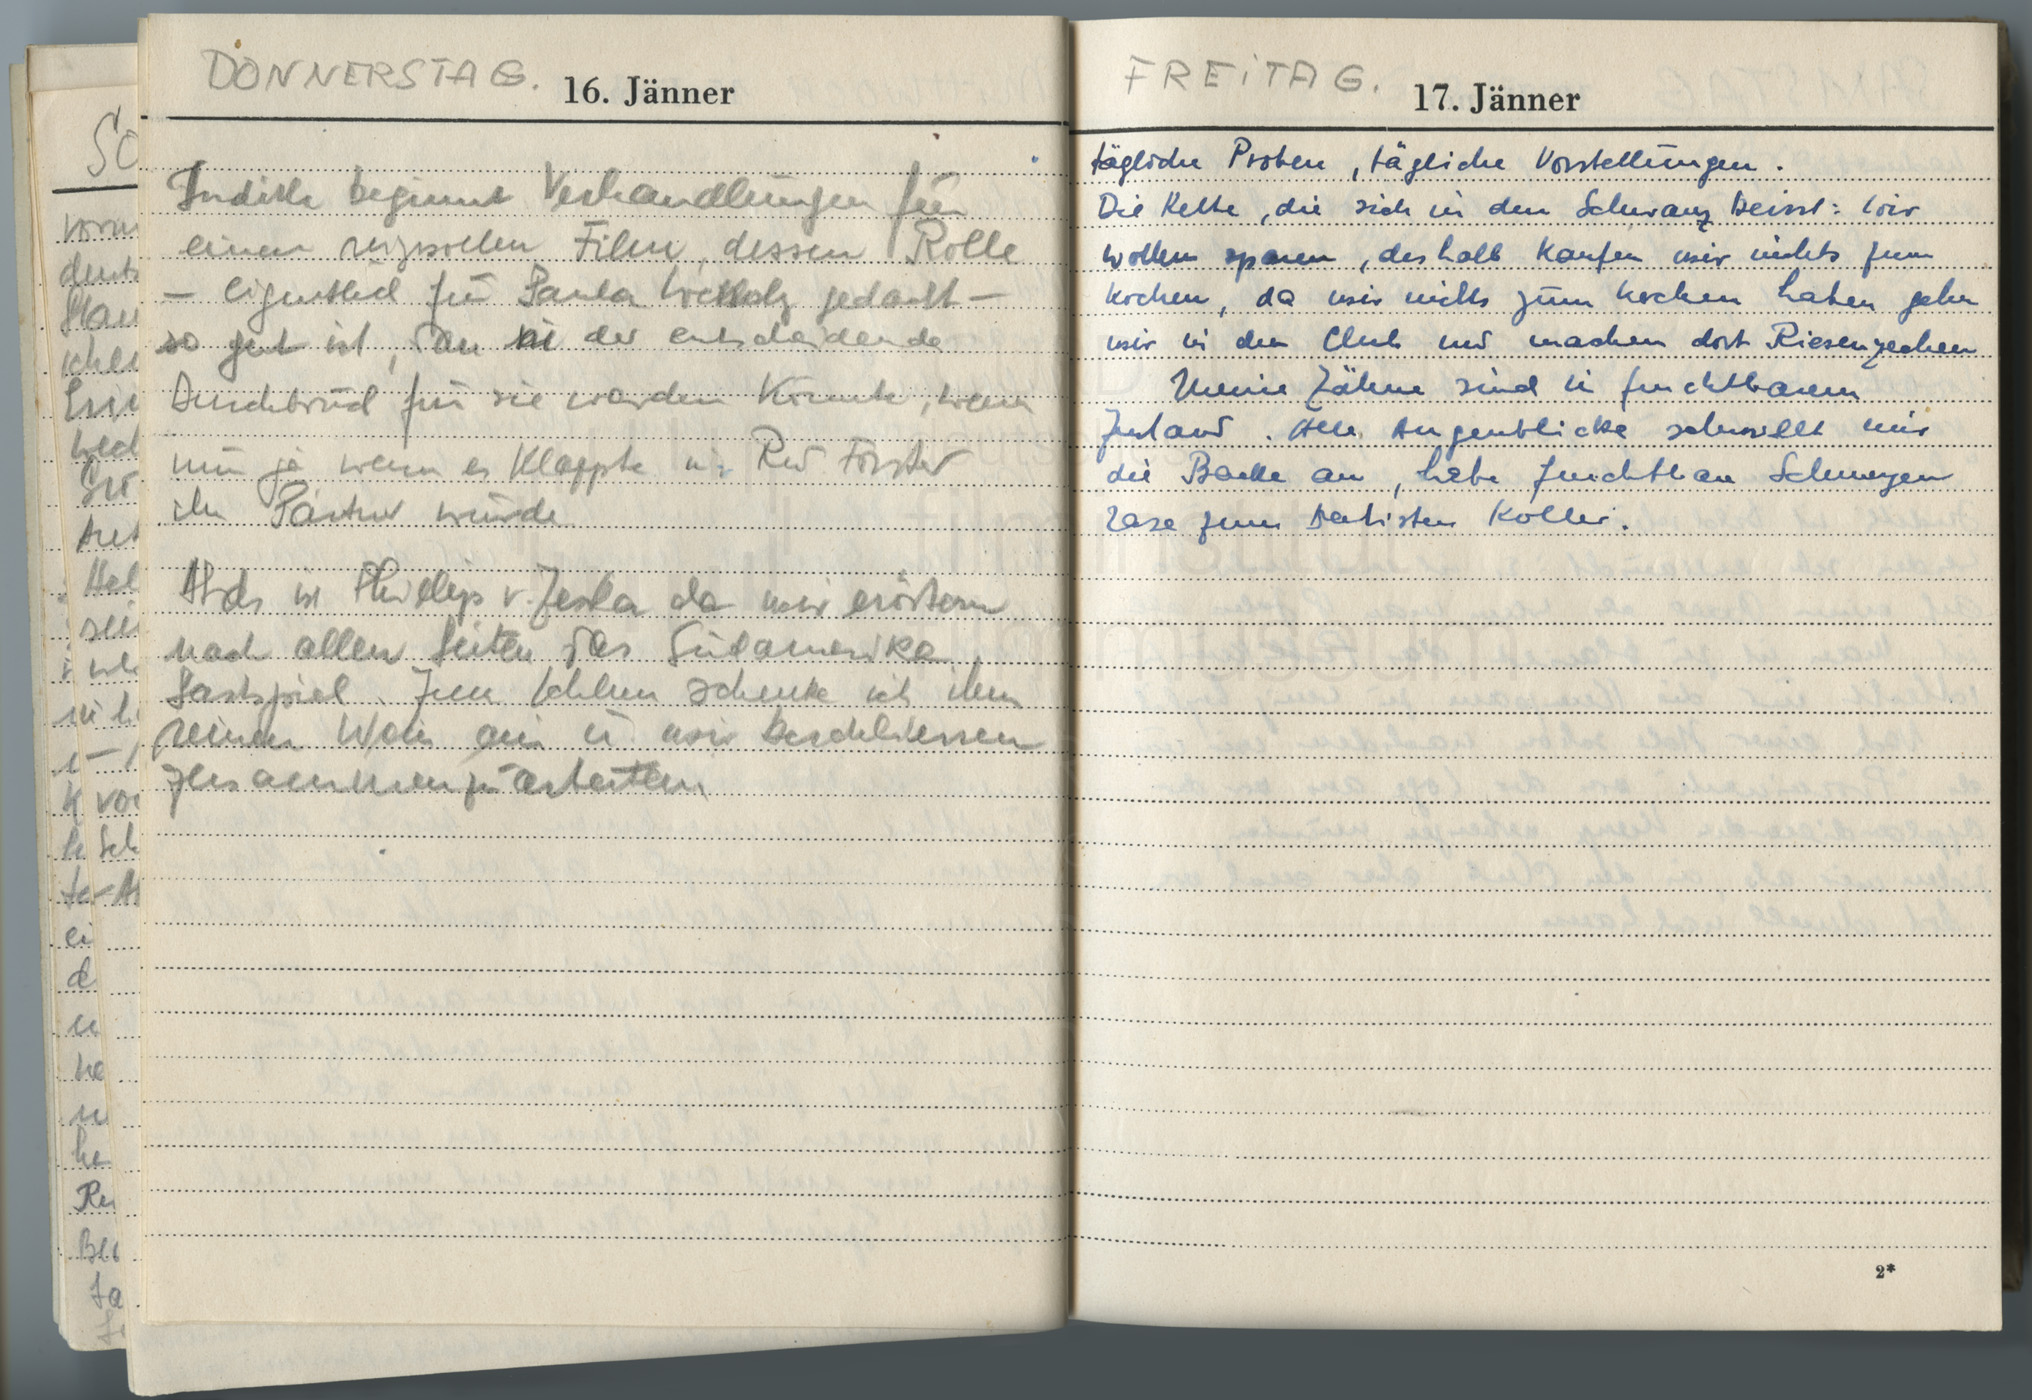 Tagebucheintrag vom 17.1.1947